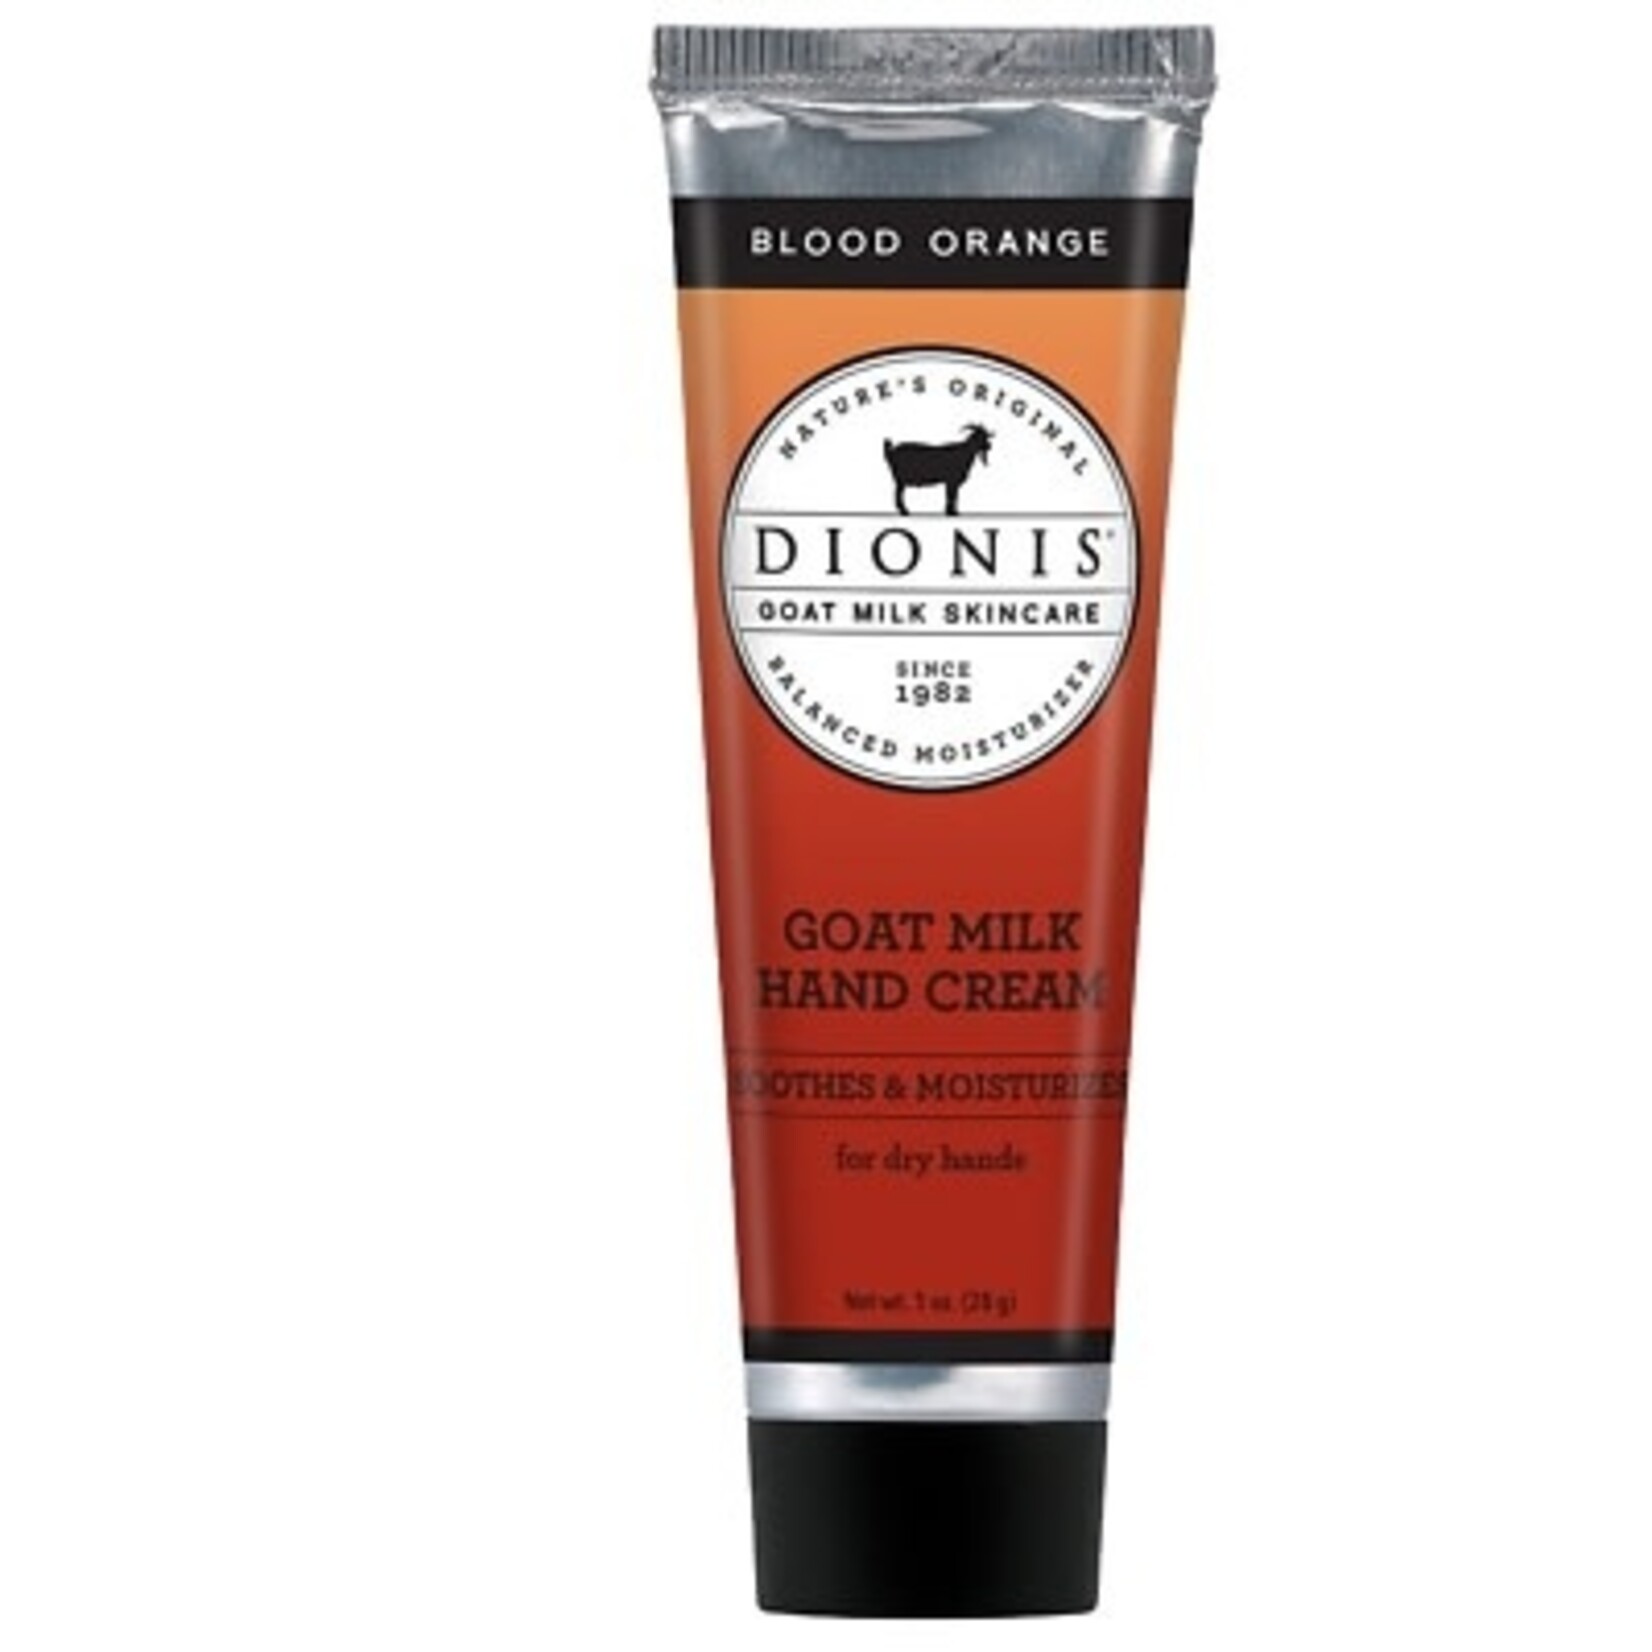 Dionis Dionis’ Goat Milk Hand Cream